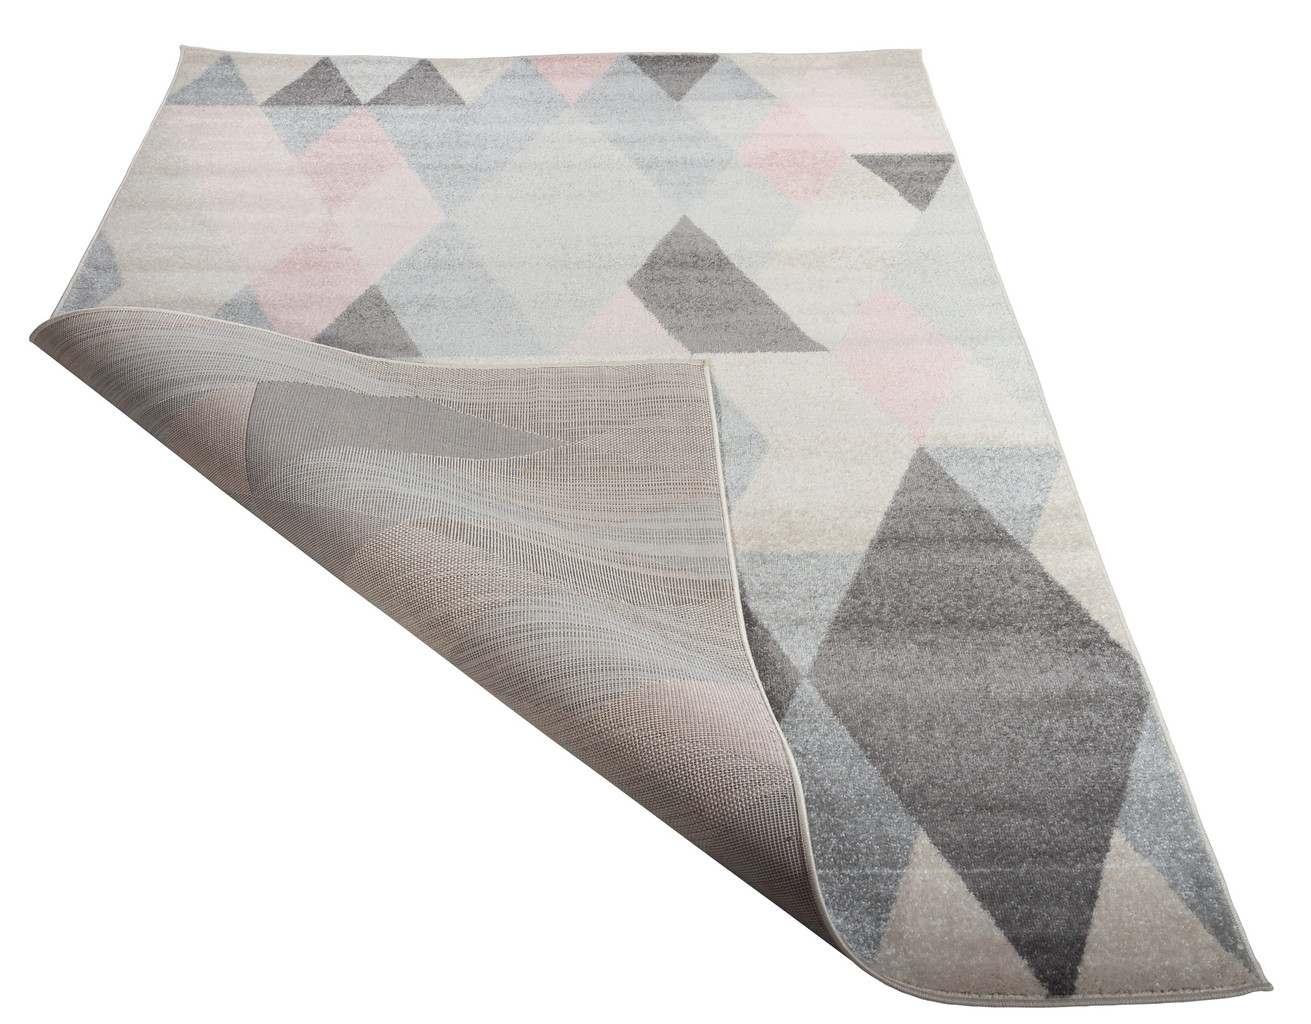 Moderní koberec se zajímavým vzorem, růžové a šedé kosočtverce, trojúhelníky Pearl Stream 09 - Carpetforyou obrázek 3